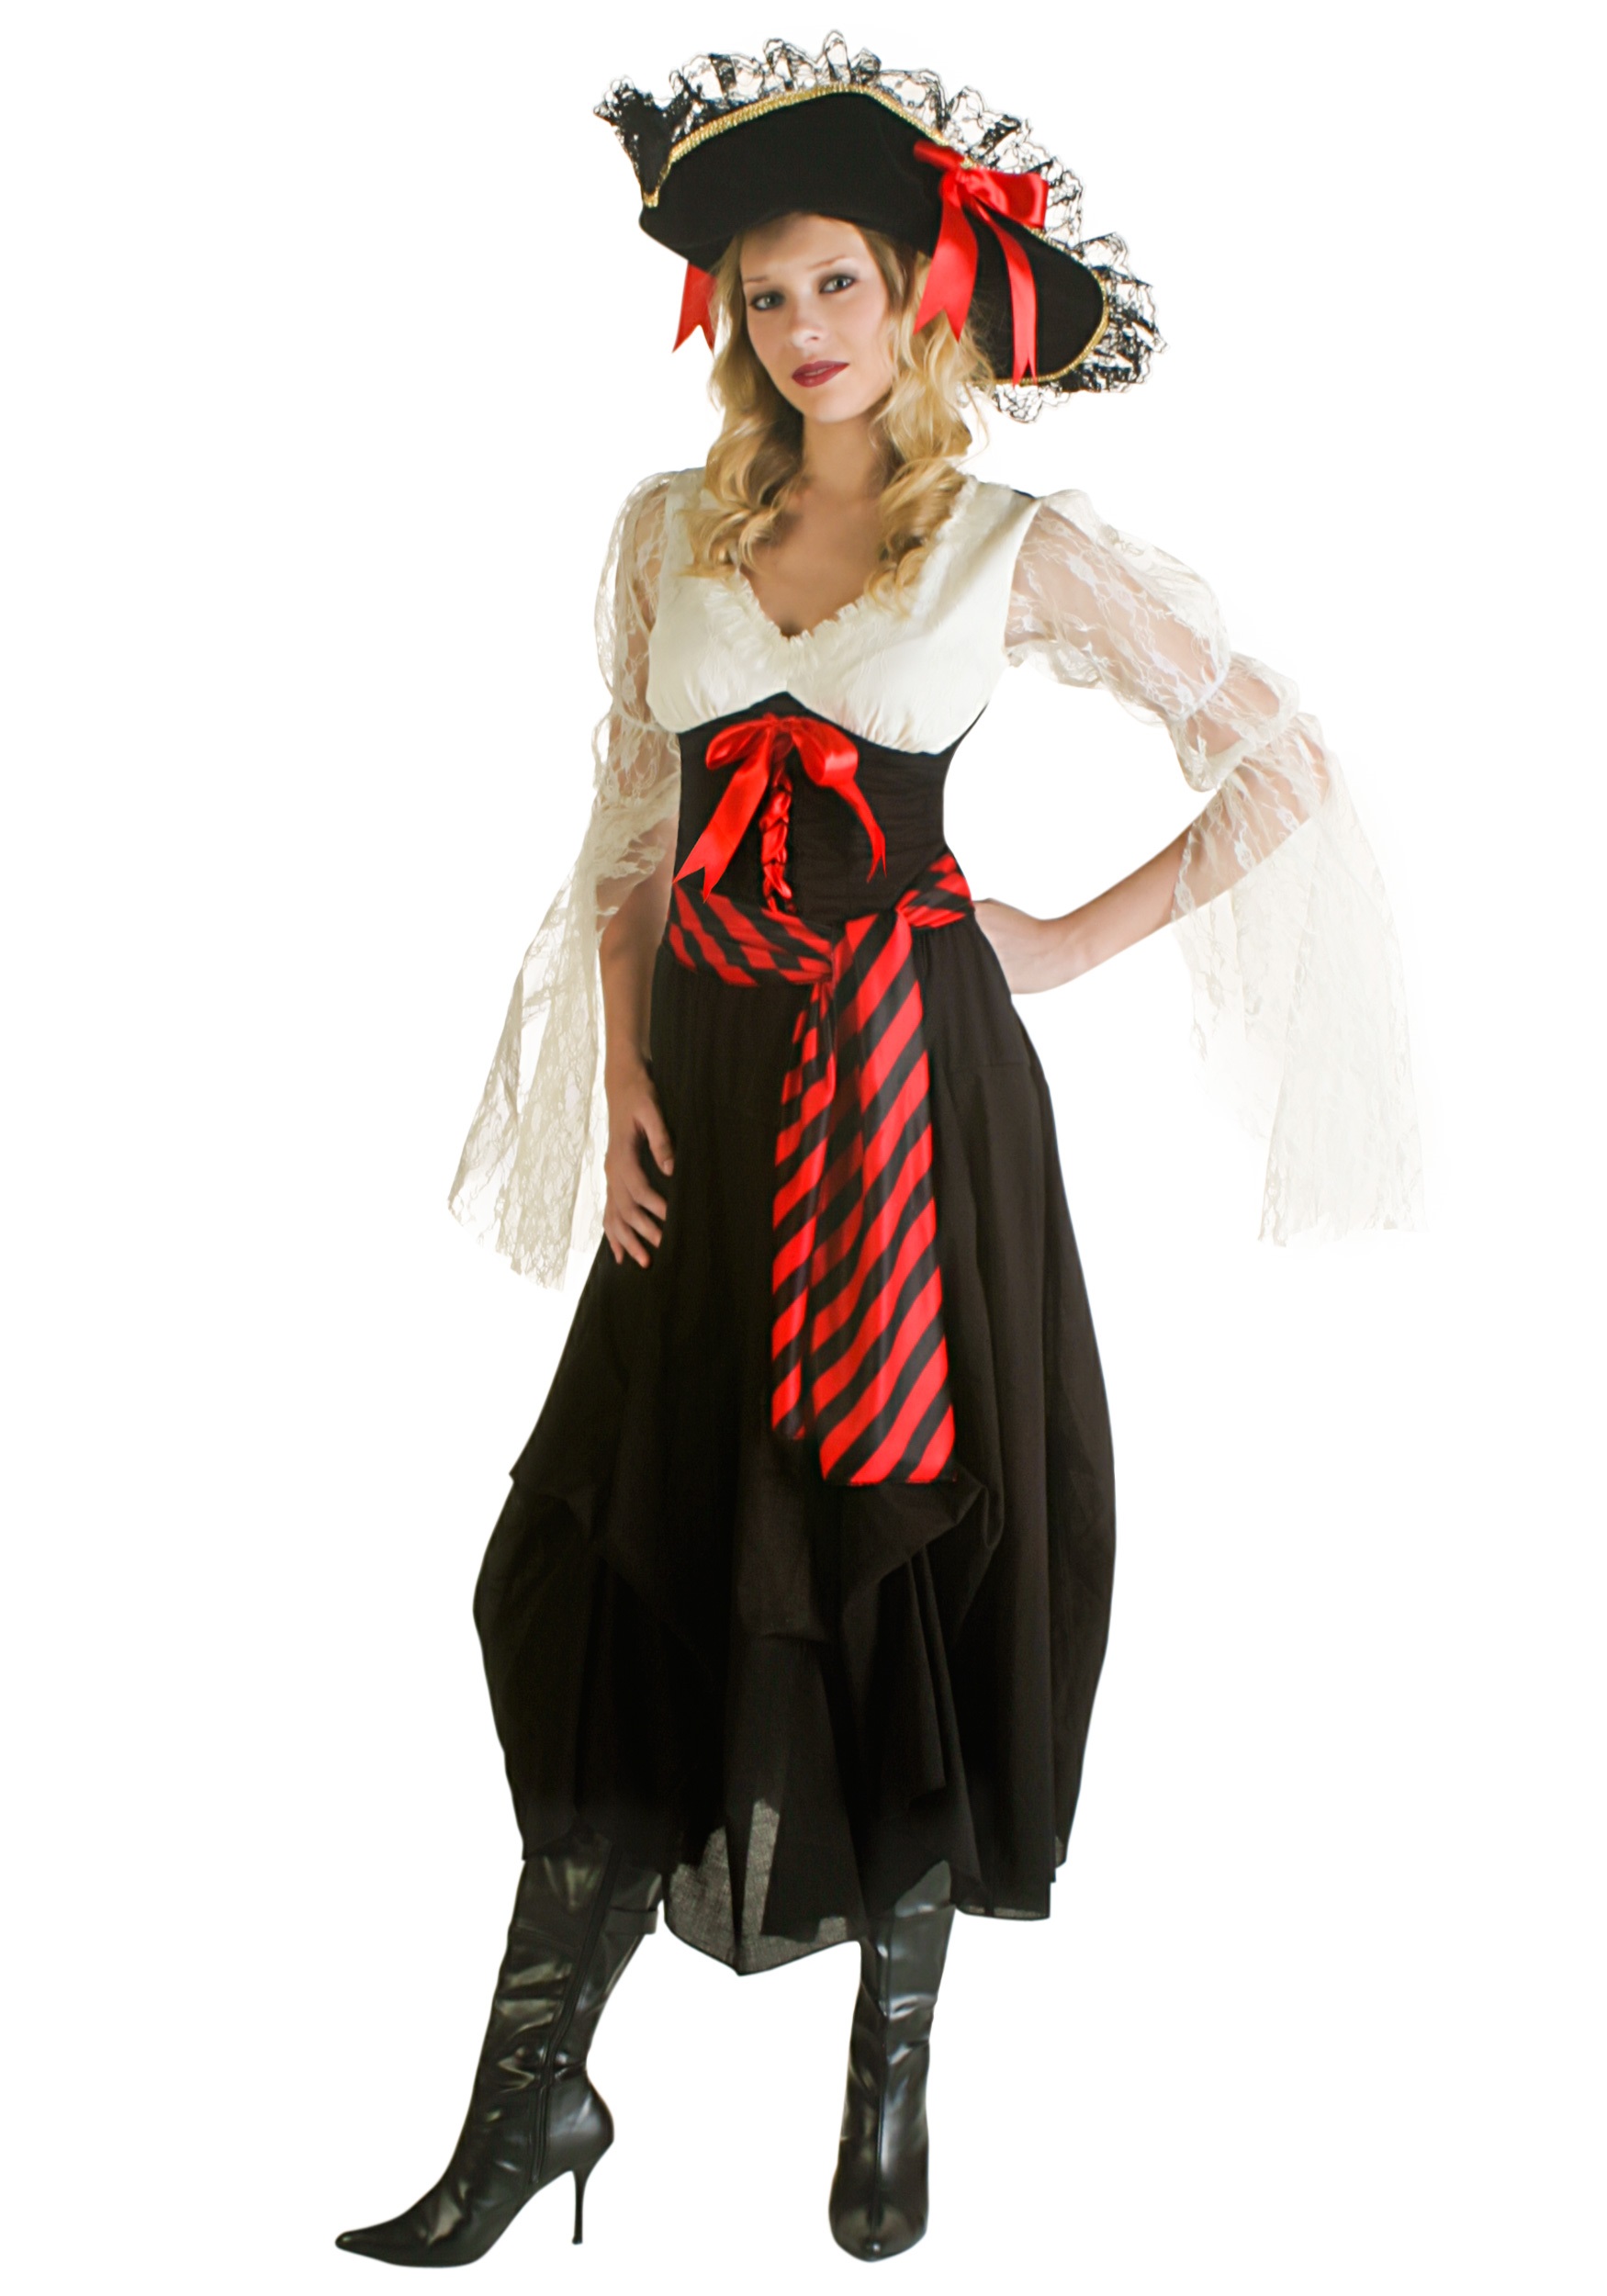 Sexy Female Pirate Costume Halloween Costume Ideas 2019 3548